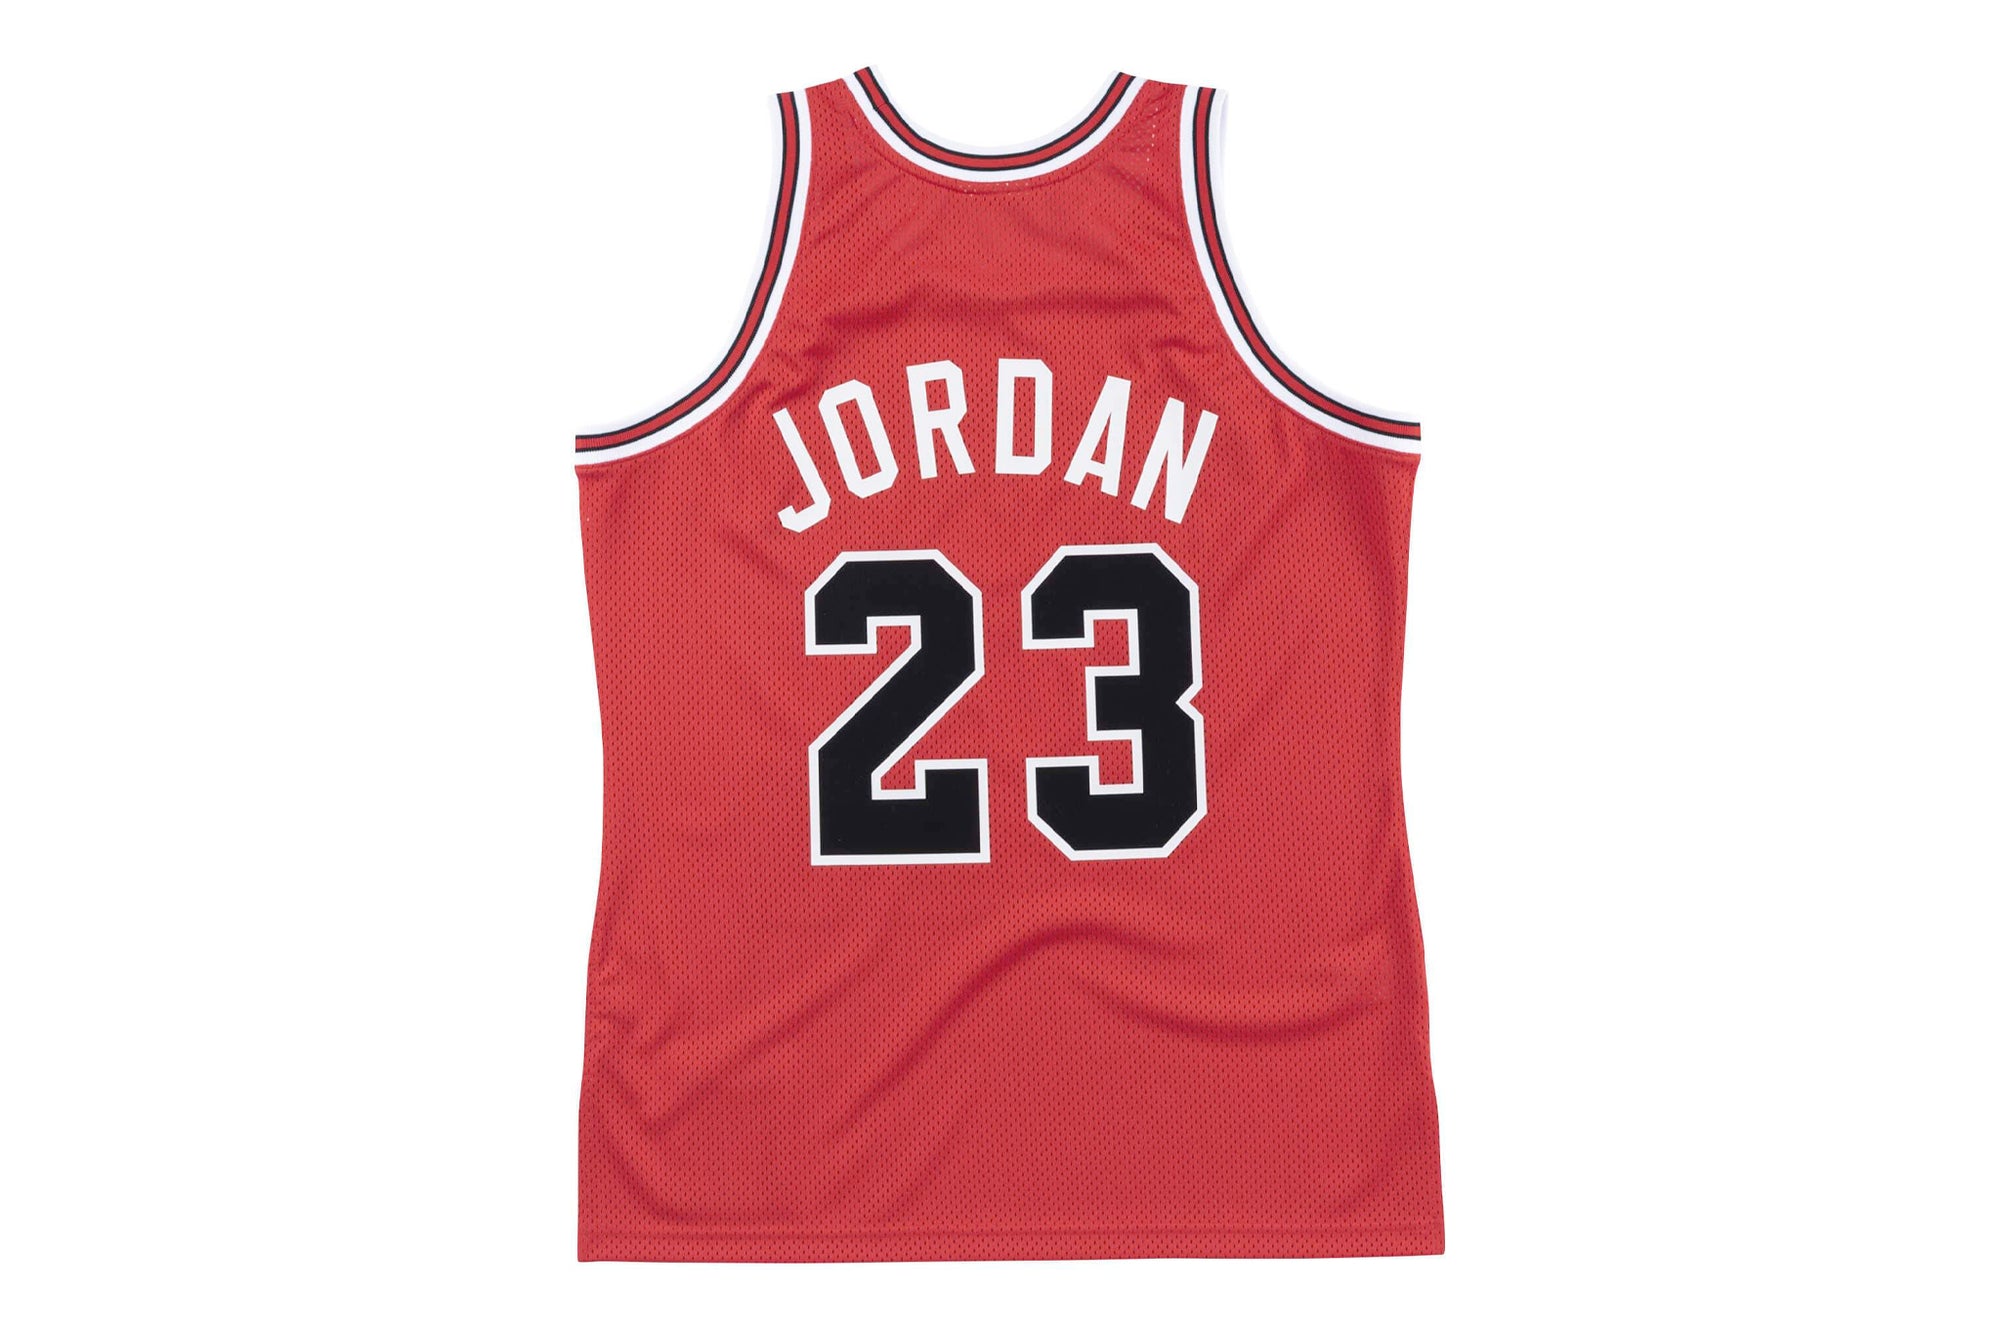 Shop Mitchell & Ness Chicago Bulls Michael Jordan 1984-1985